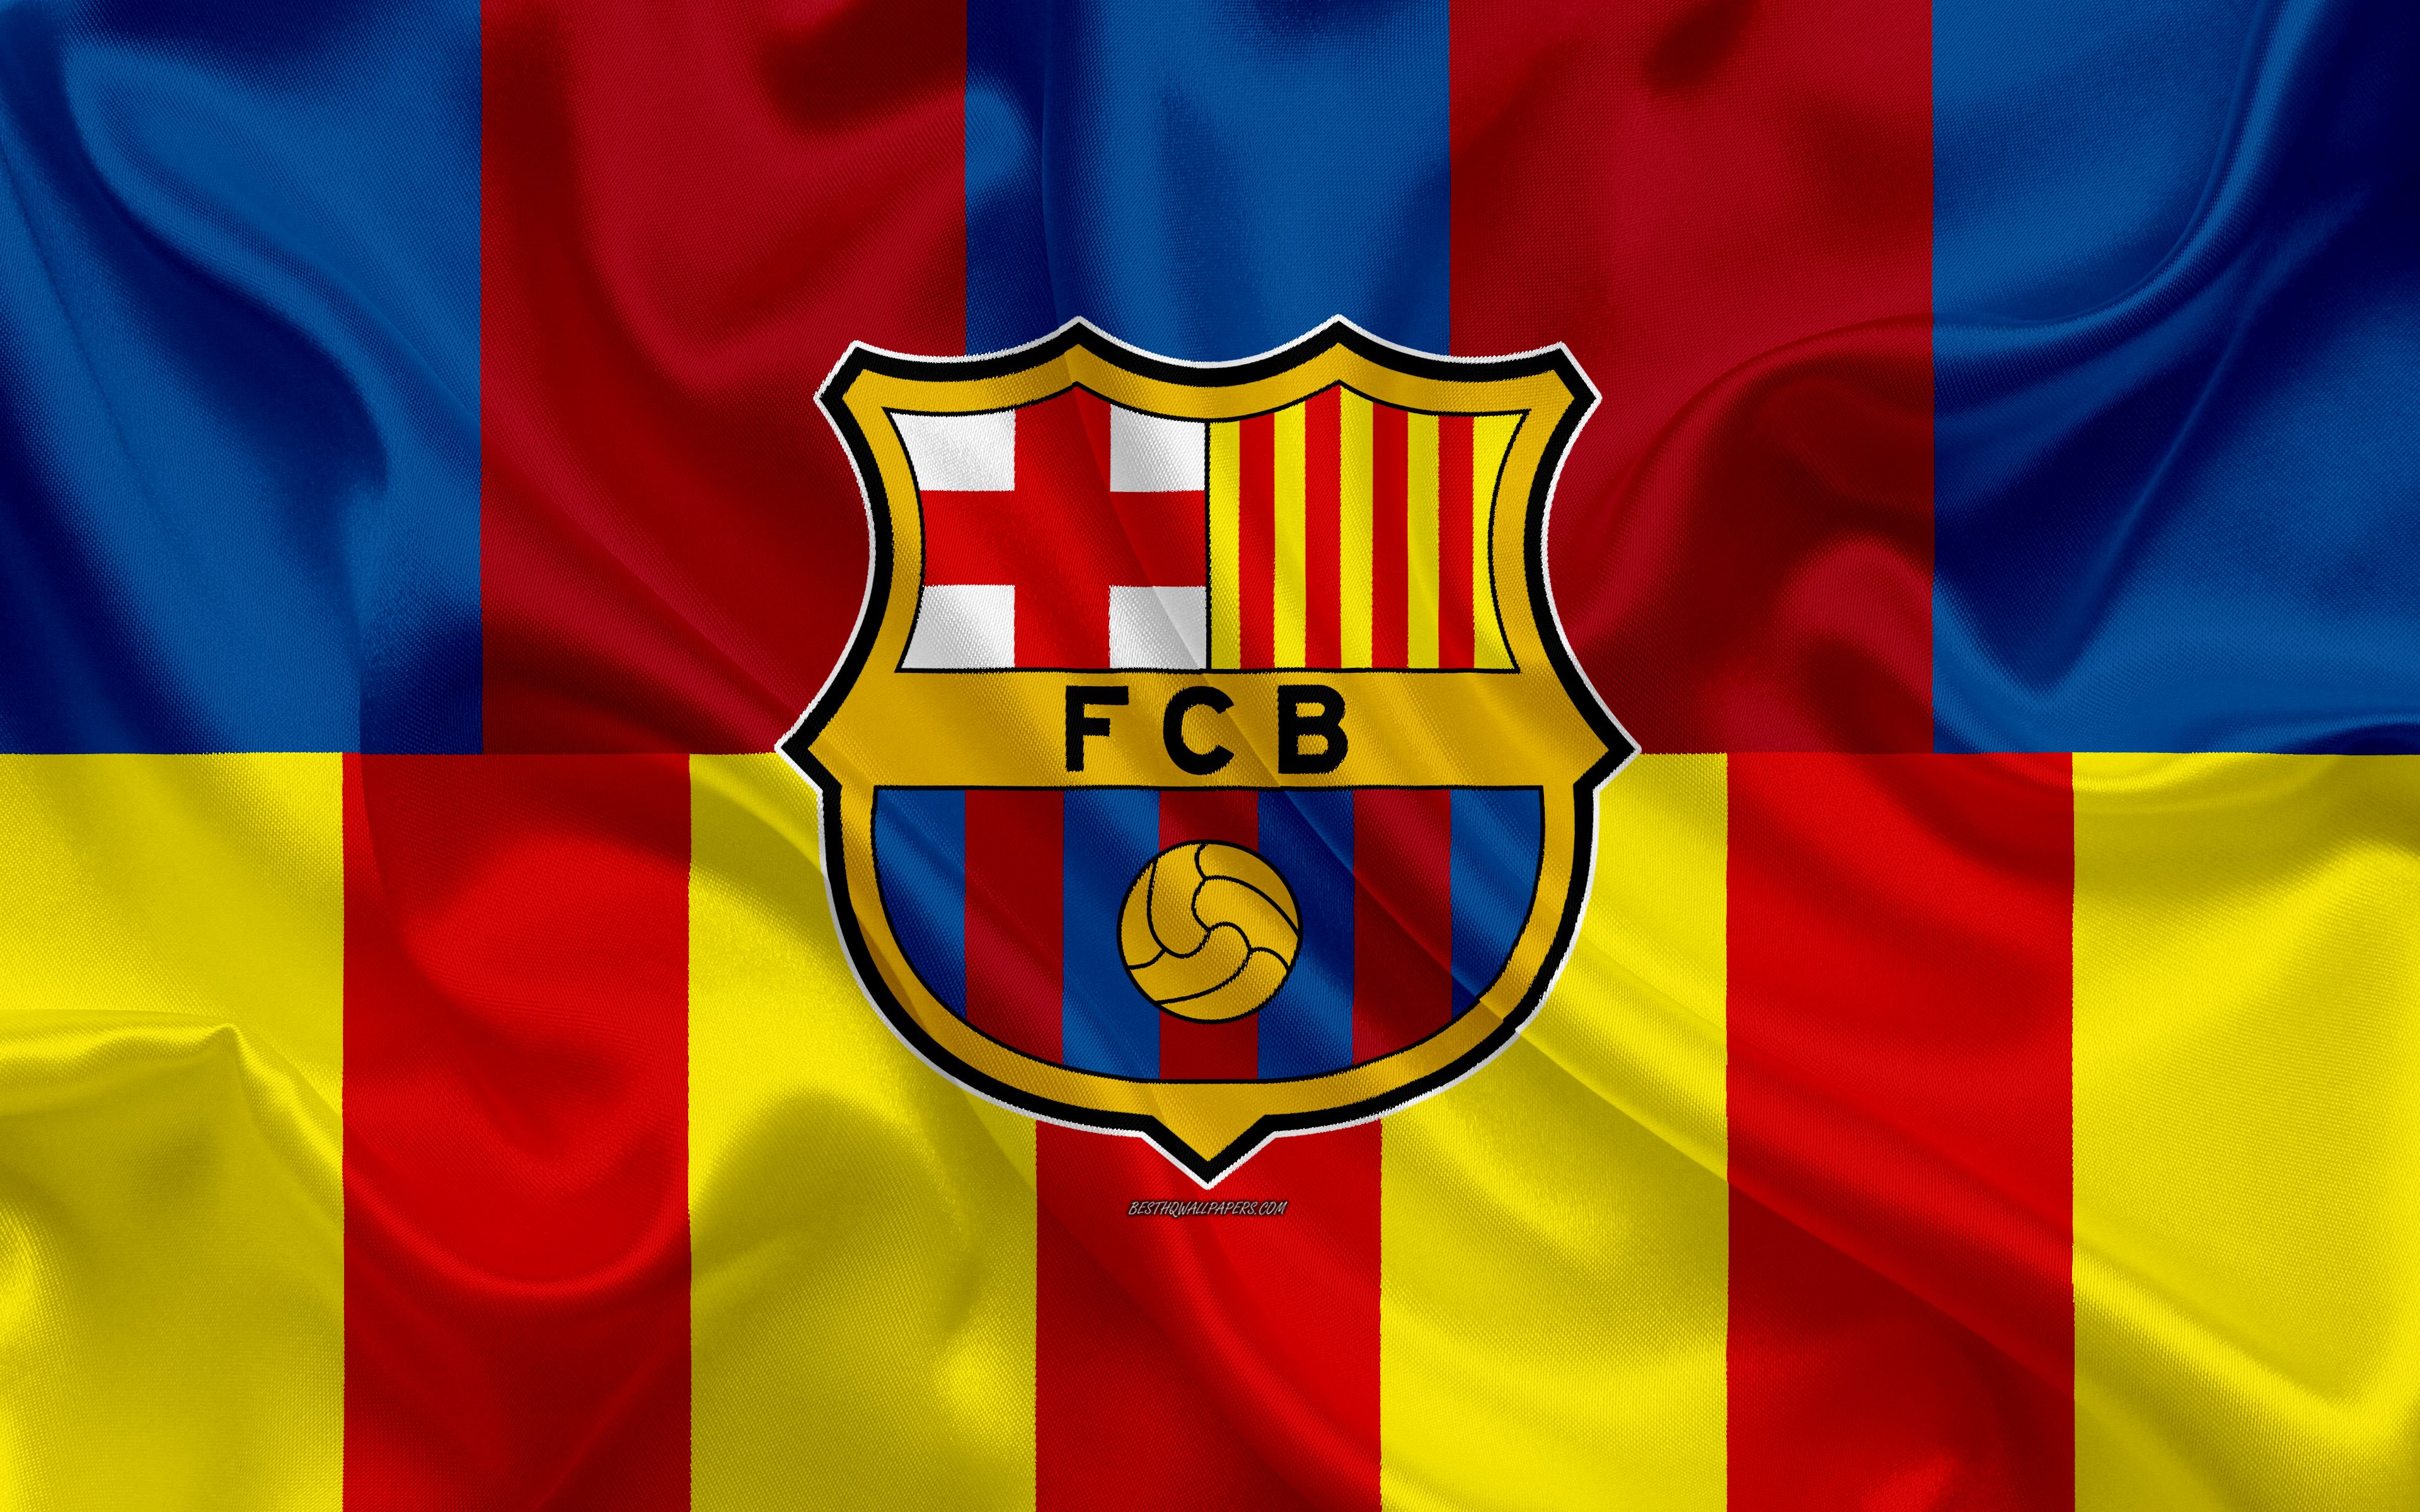 Download wallpaper FC Barcelona, 4k, logo, blue burgundy silk flag, flag of Catalonia, Spain, emblem, Spanish football club, La Liga, football, silk texture, creative art, Barca for desktop with resolution 3840x2400. High